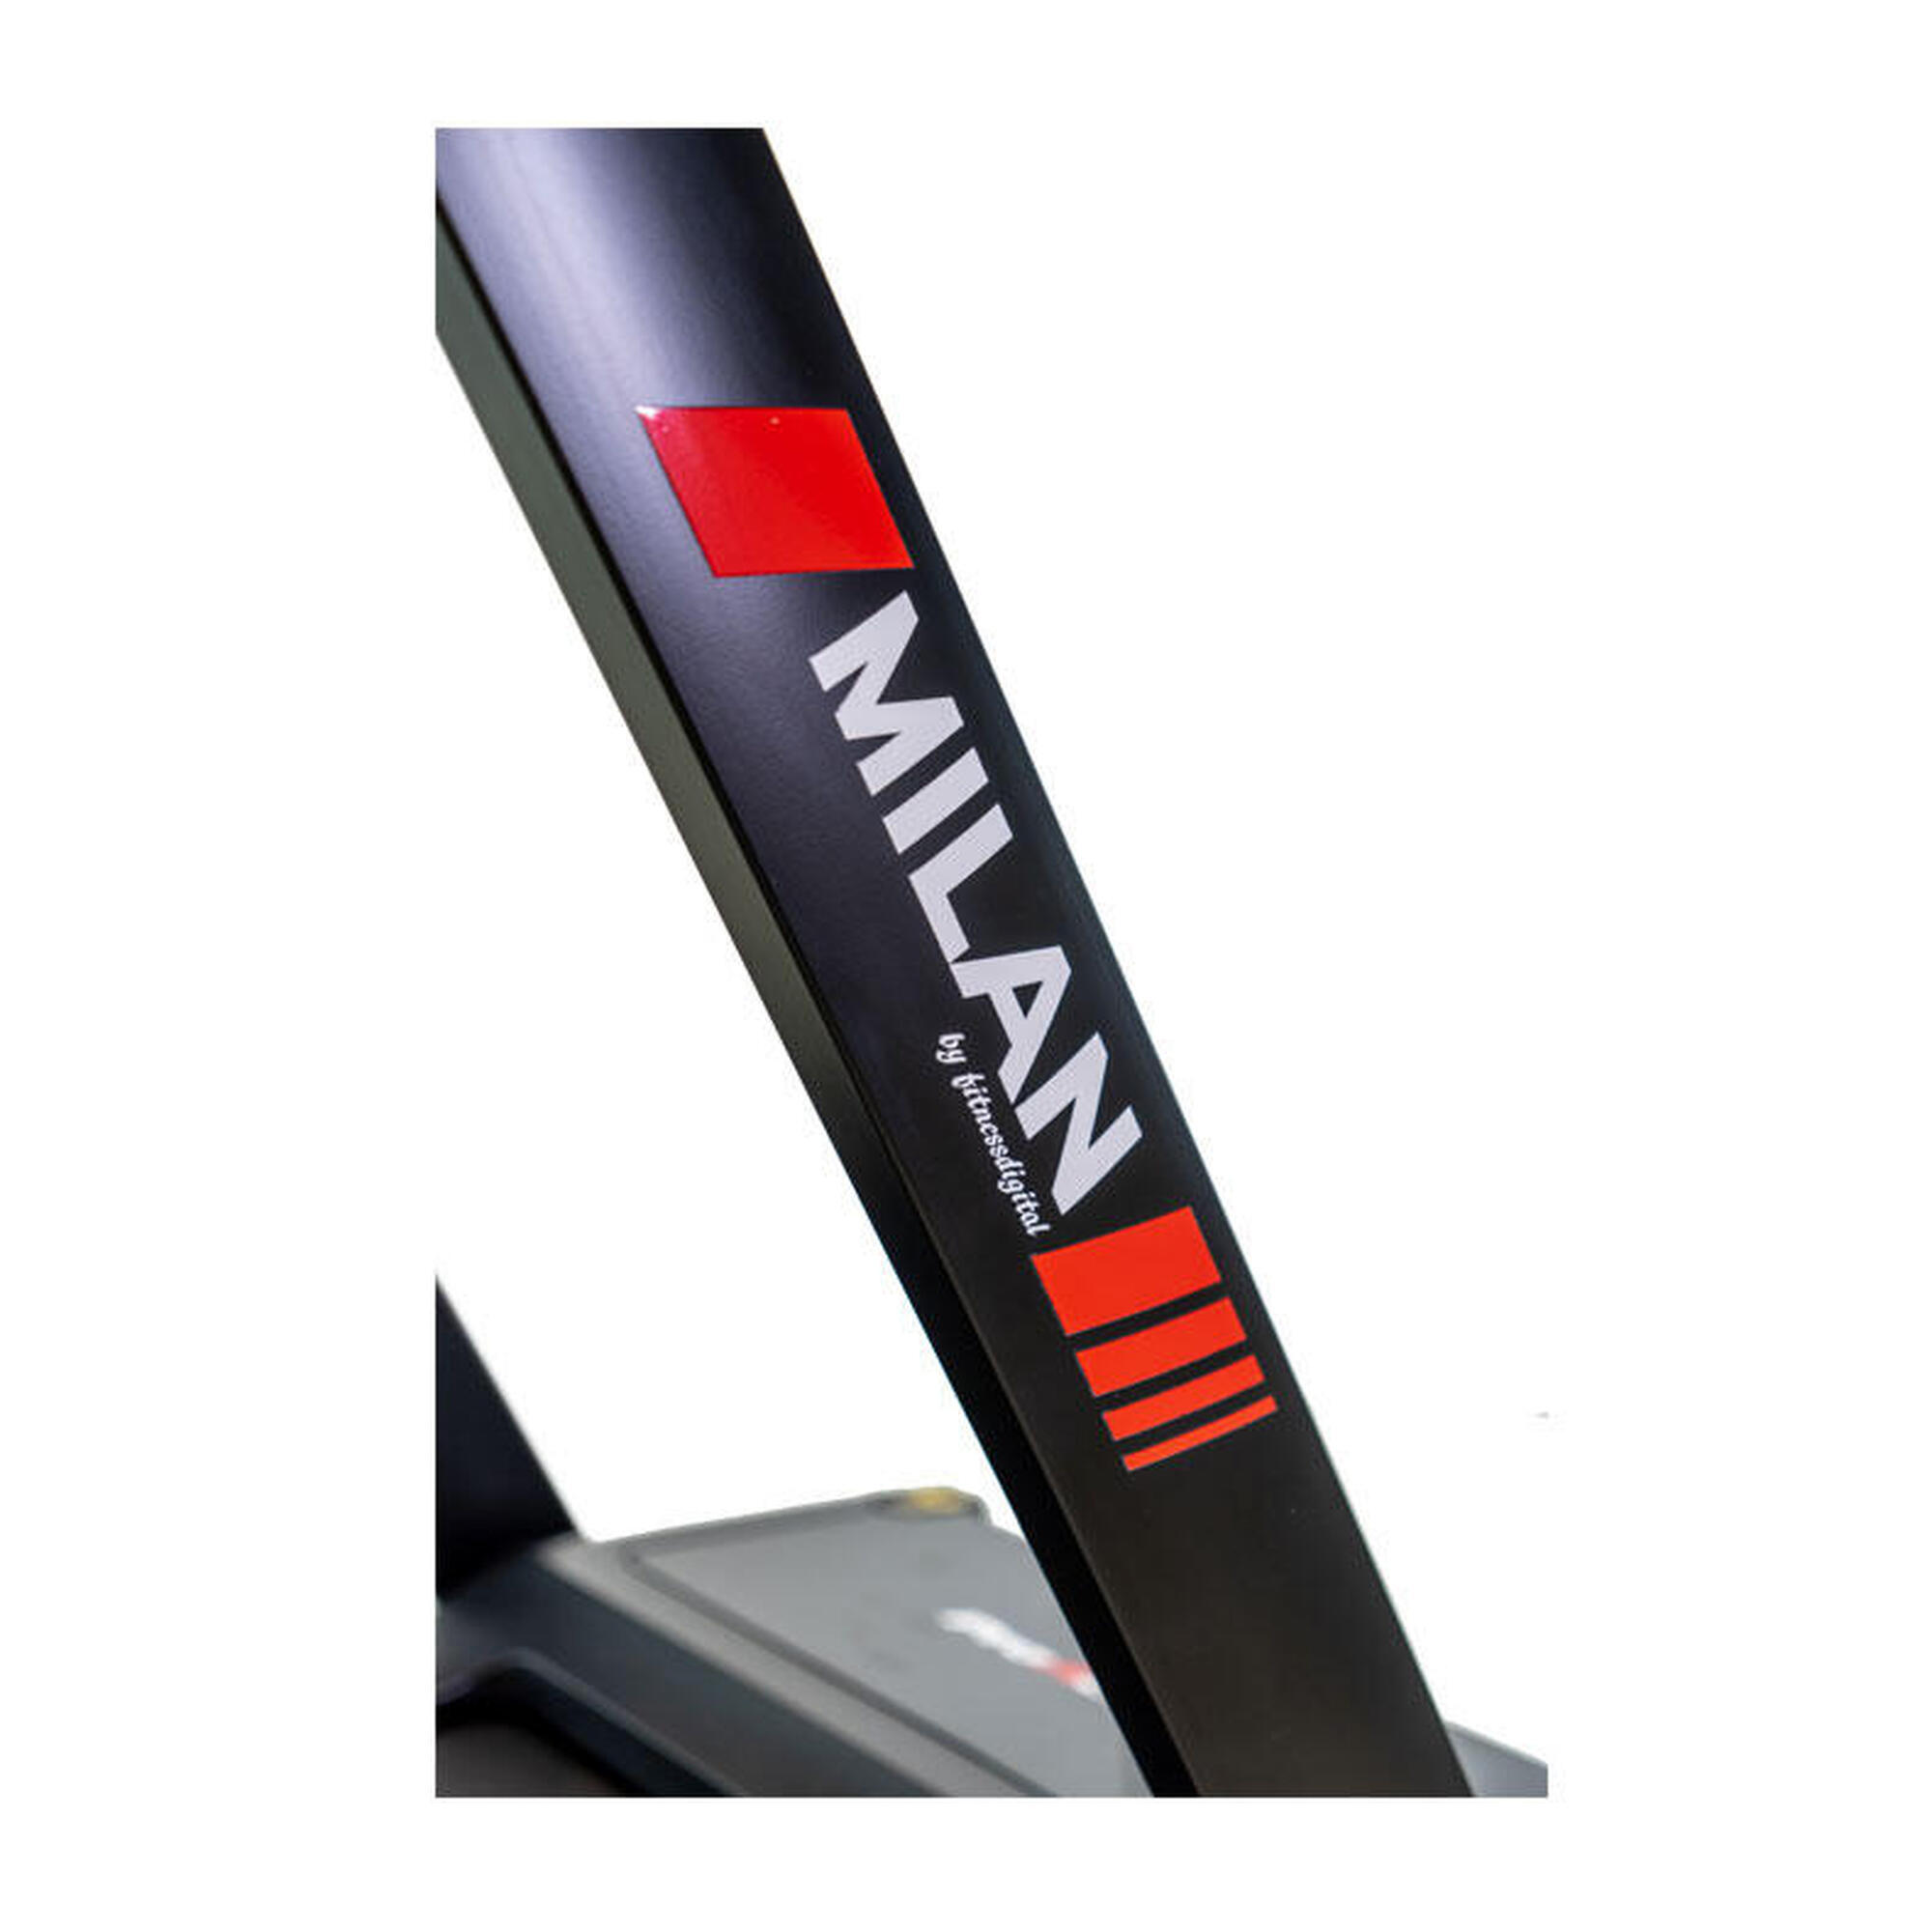 Passadeira de correr - Milan- Kinomap e Zwift - 140x50cm - LCD